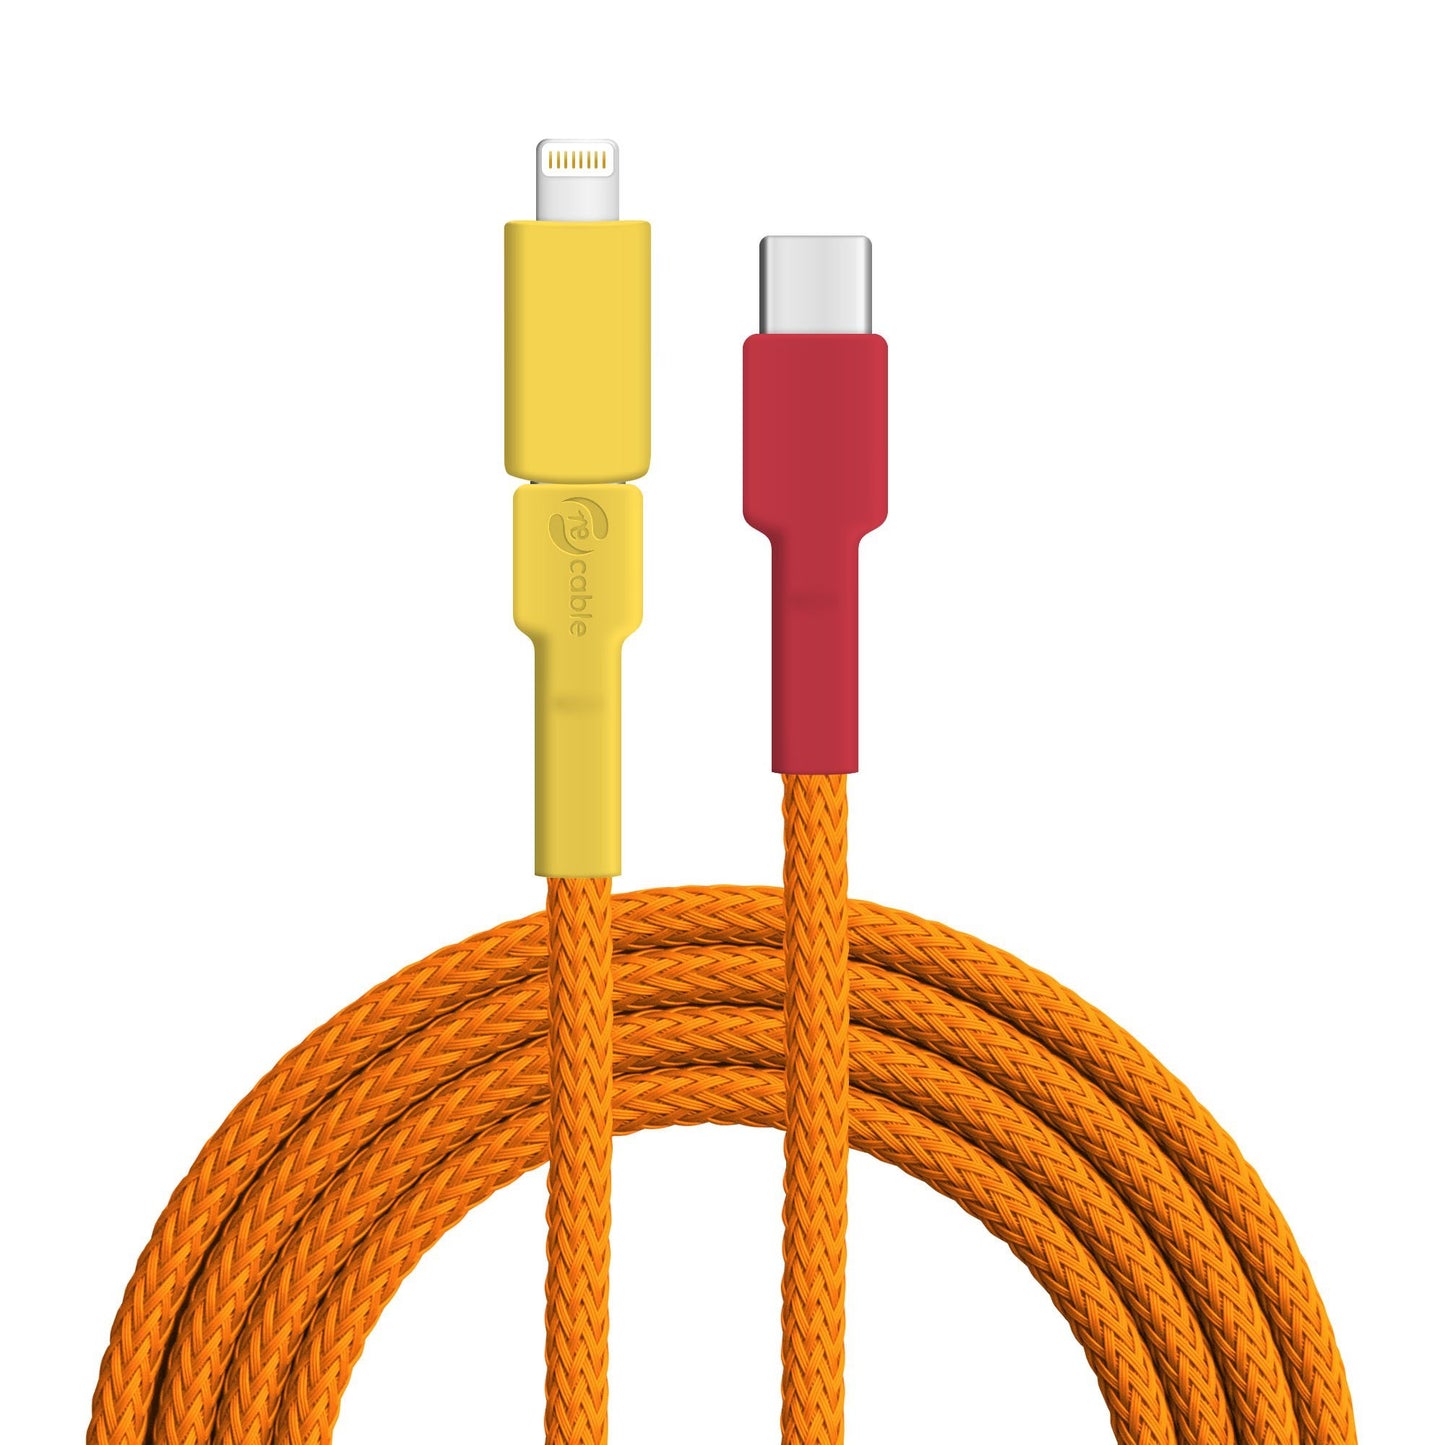 USB-Kabel, Design: Flammenlaubenvogel, Anschlüsse: USB C auf Micro-USB mit Lightning Adapter (verbunden)